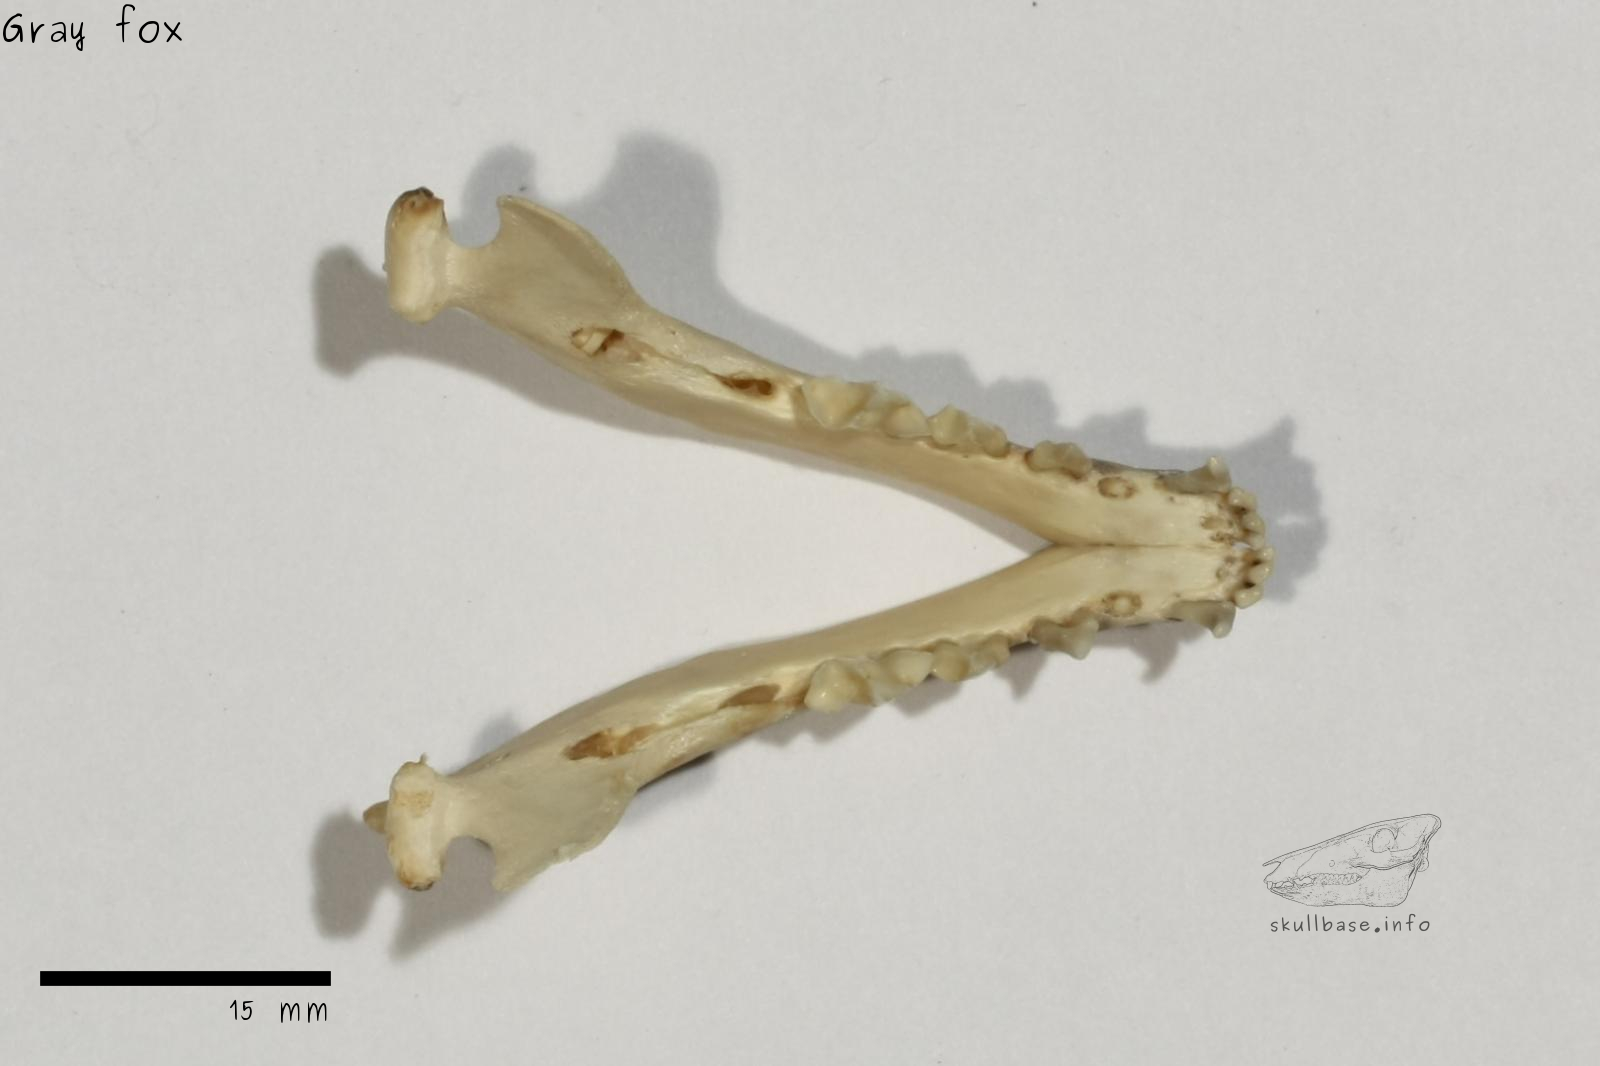 Gray fox (Urocyon cinereoargenteus) jaw